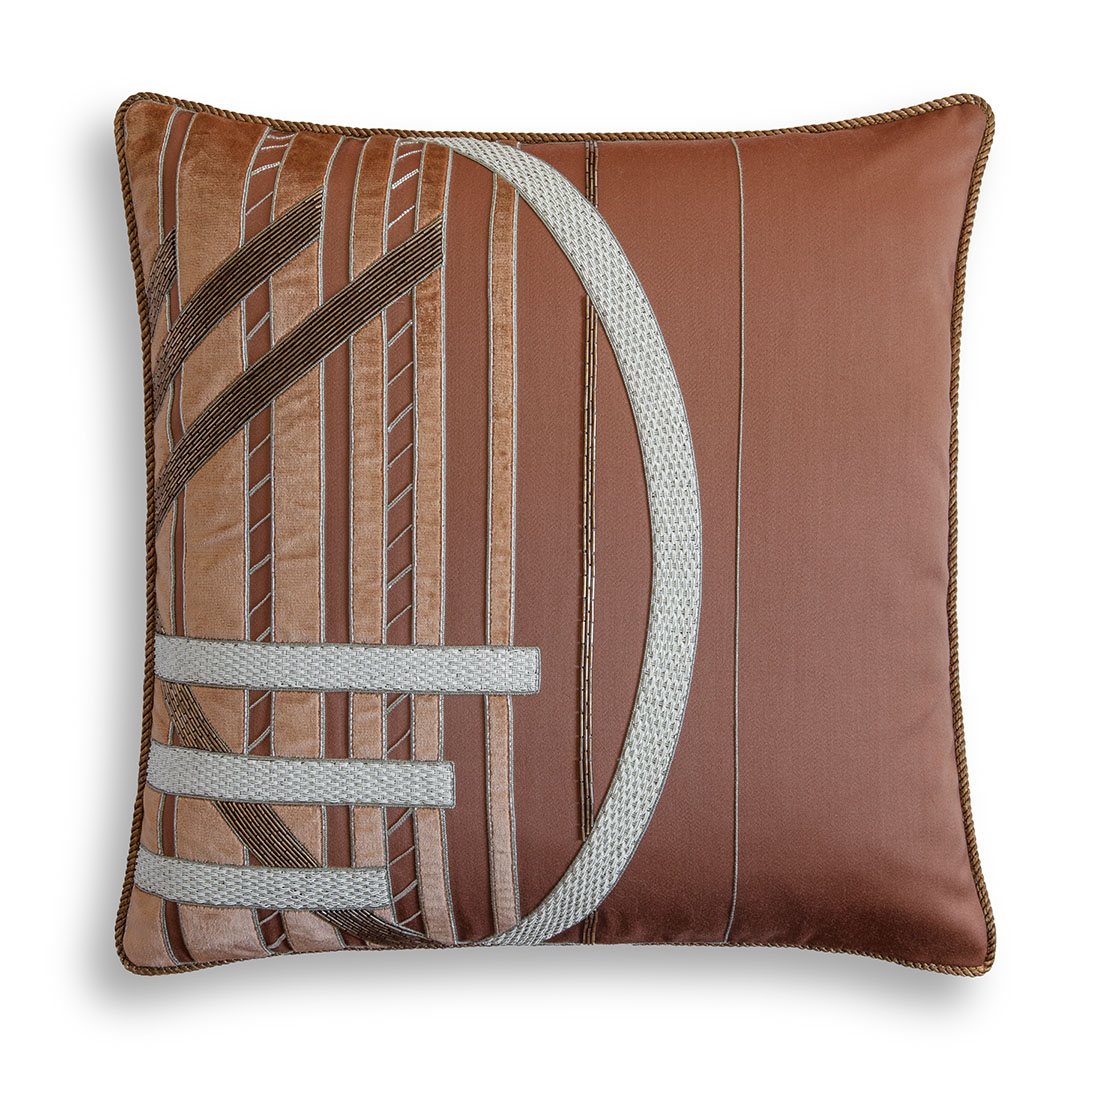 Audrey cushion in Eriskay - Clay with Capri silk velvet - Copper applique - Beaumont & Fletcher